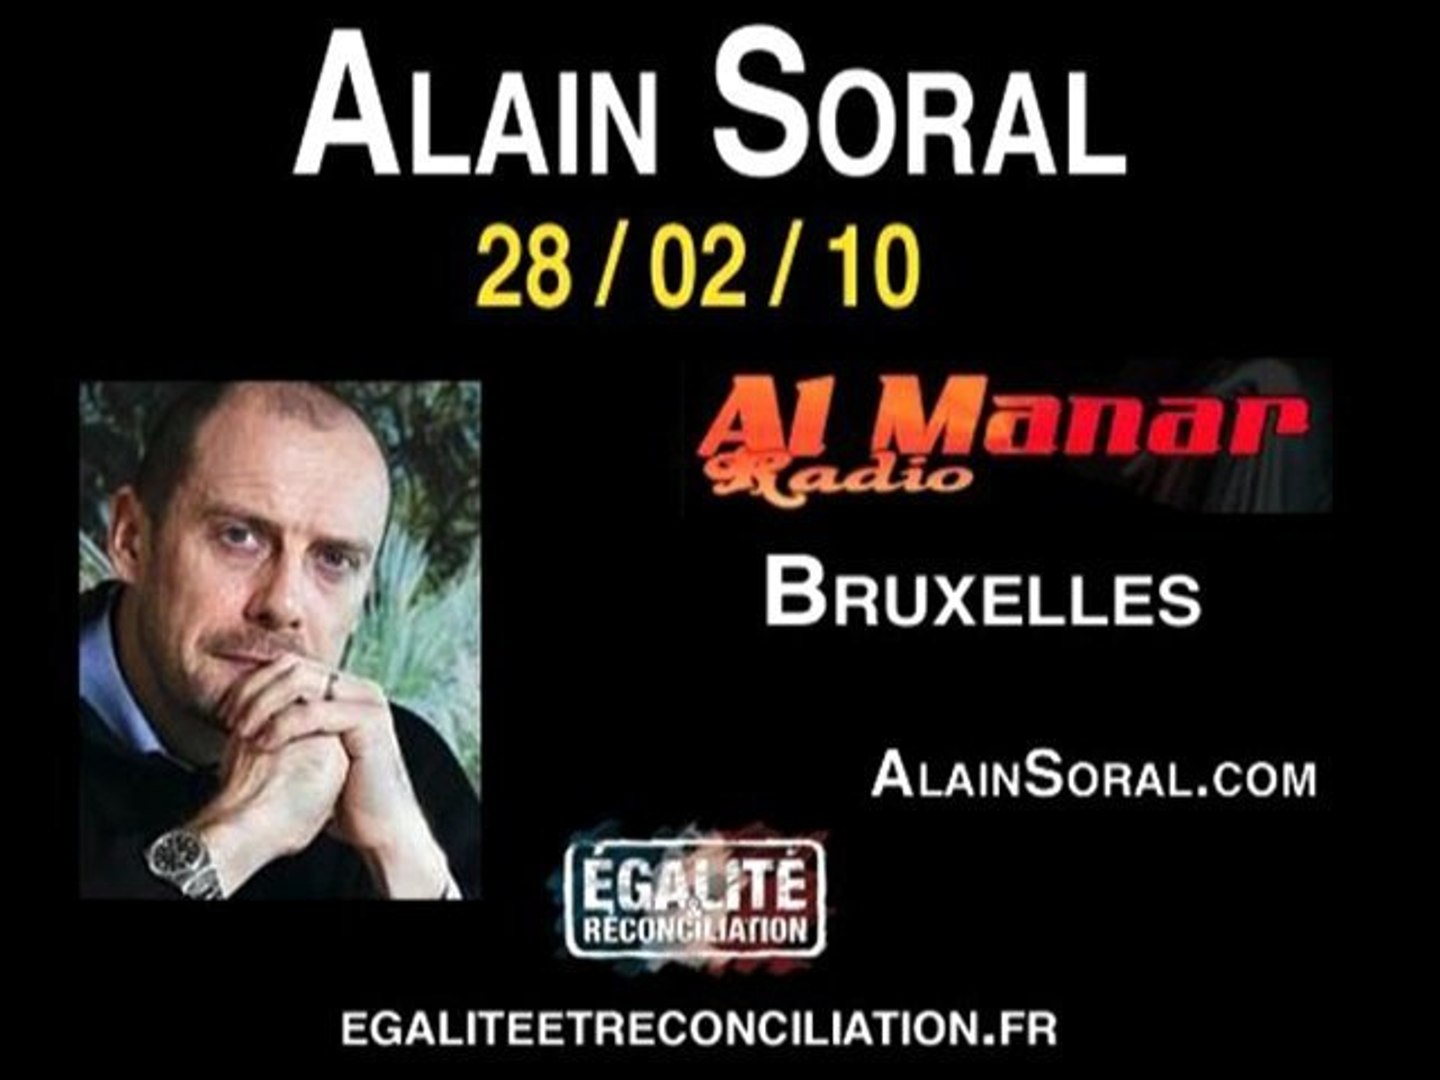 Alain Soral - Radio Al Manar Bruxelles - 28-08-10 - Vidéo Dailymotion